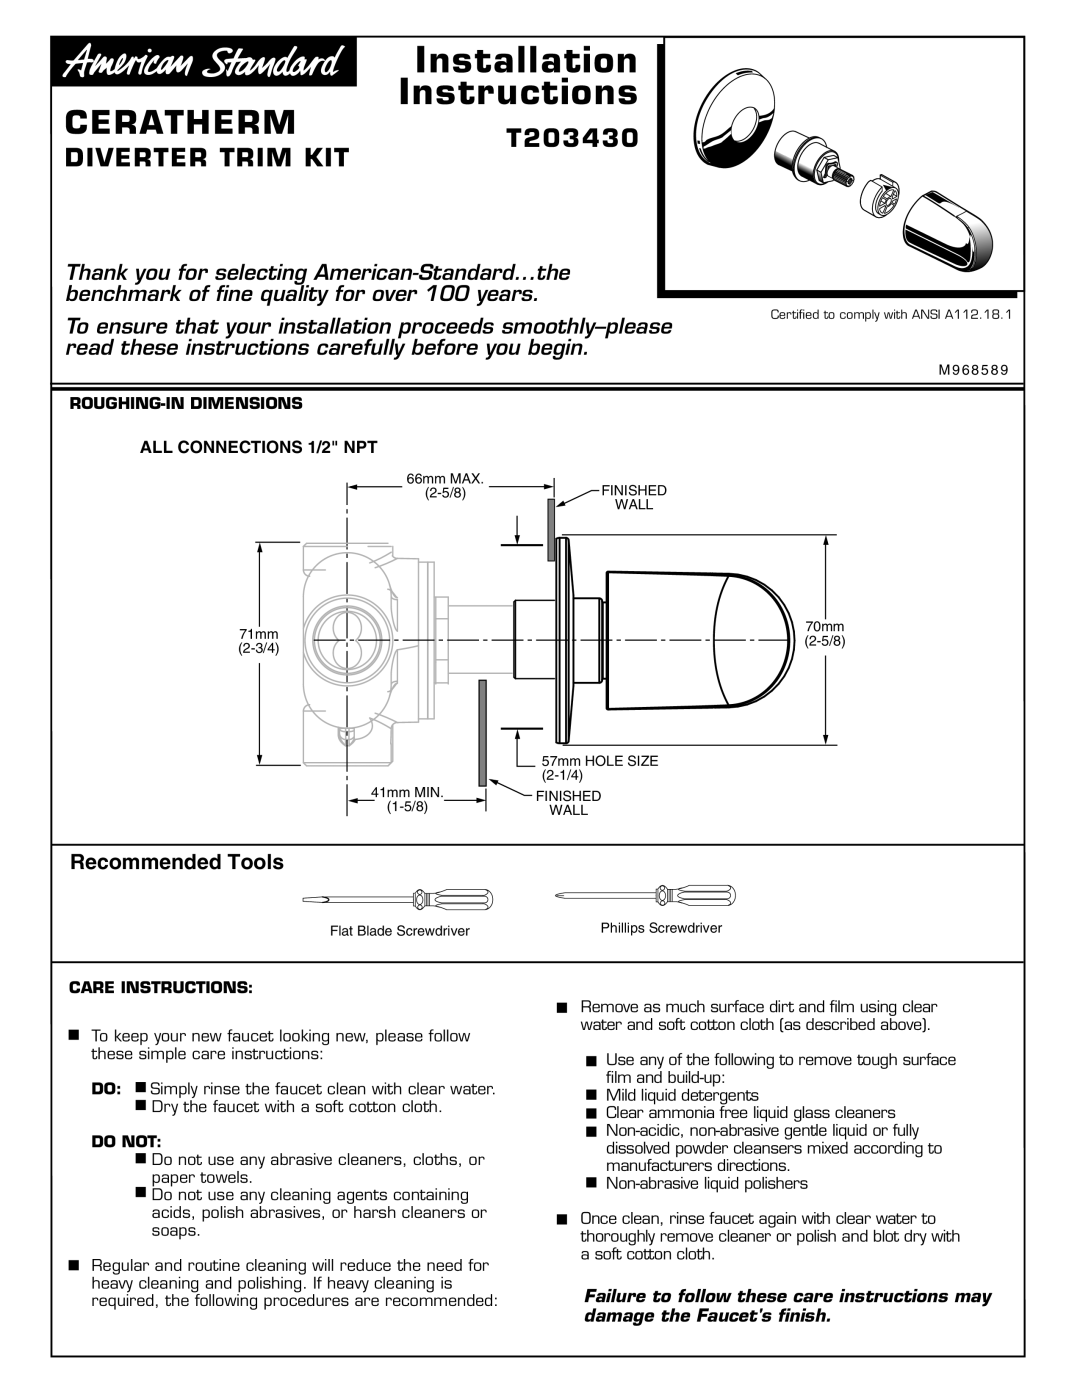 American Standard M968589 installation instructions CERATHERMT203430, Diverter Trim Kit, Installation Instructions 